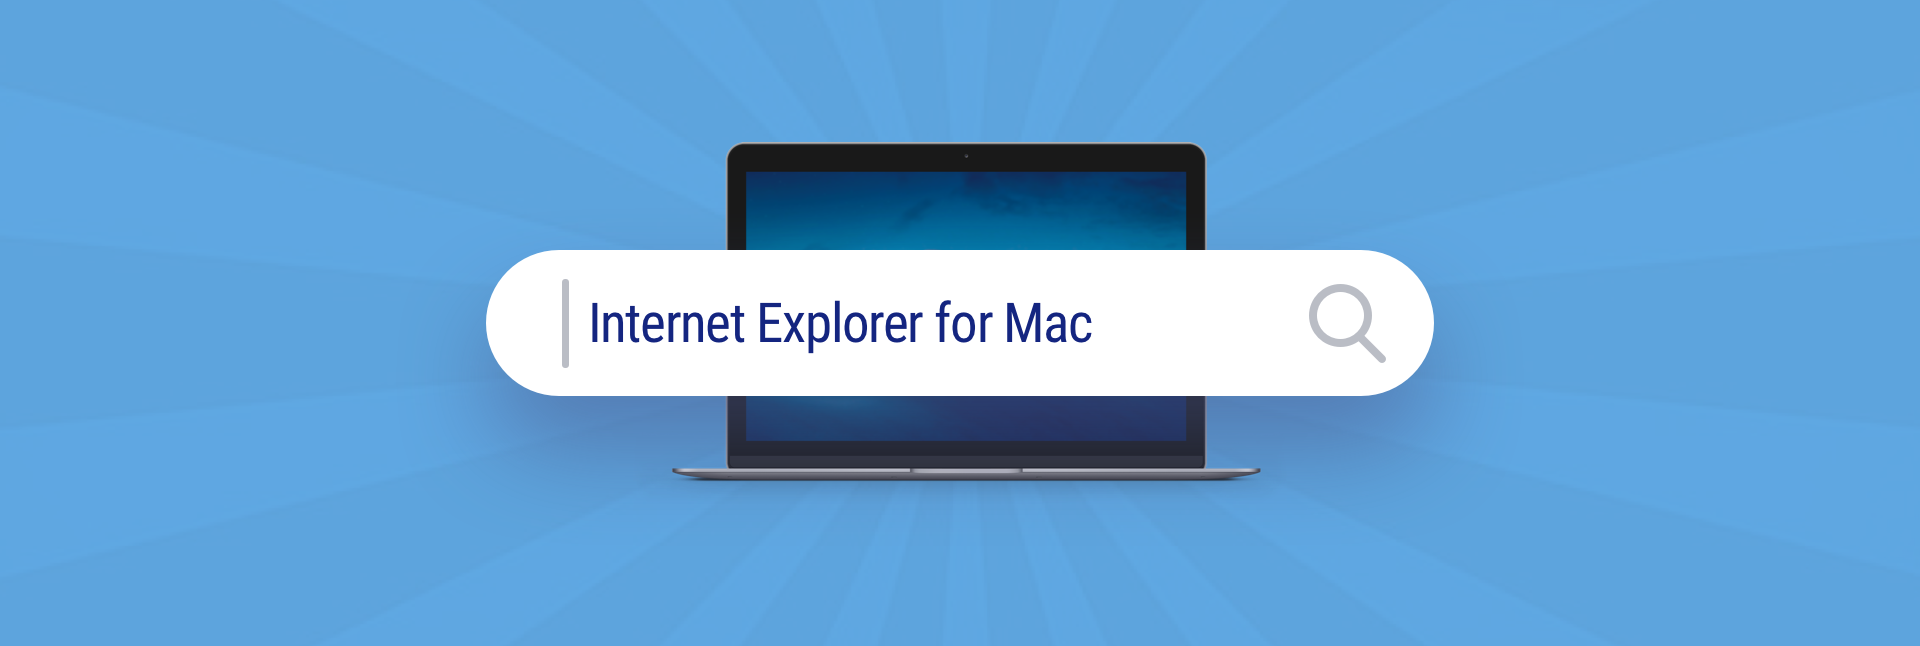 new internet explorer for mac